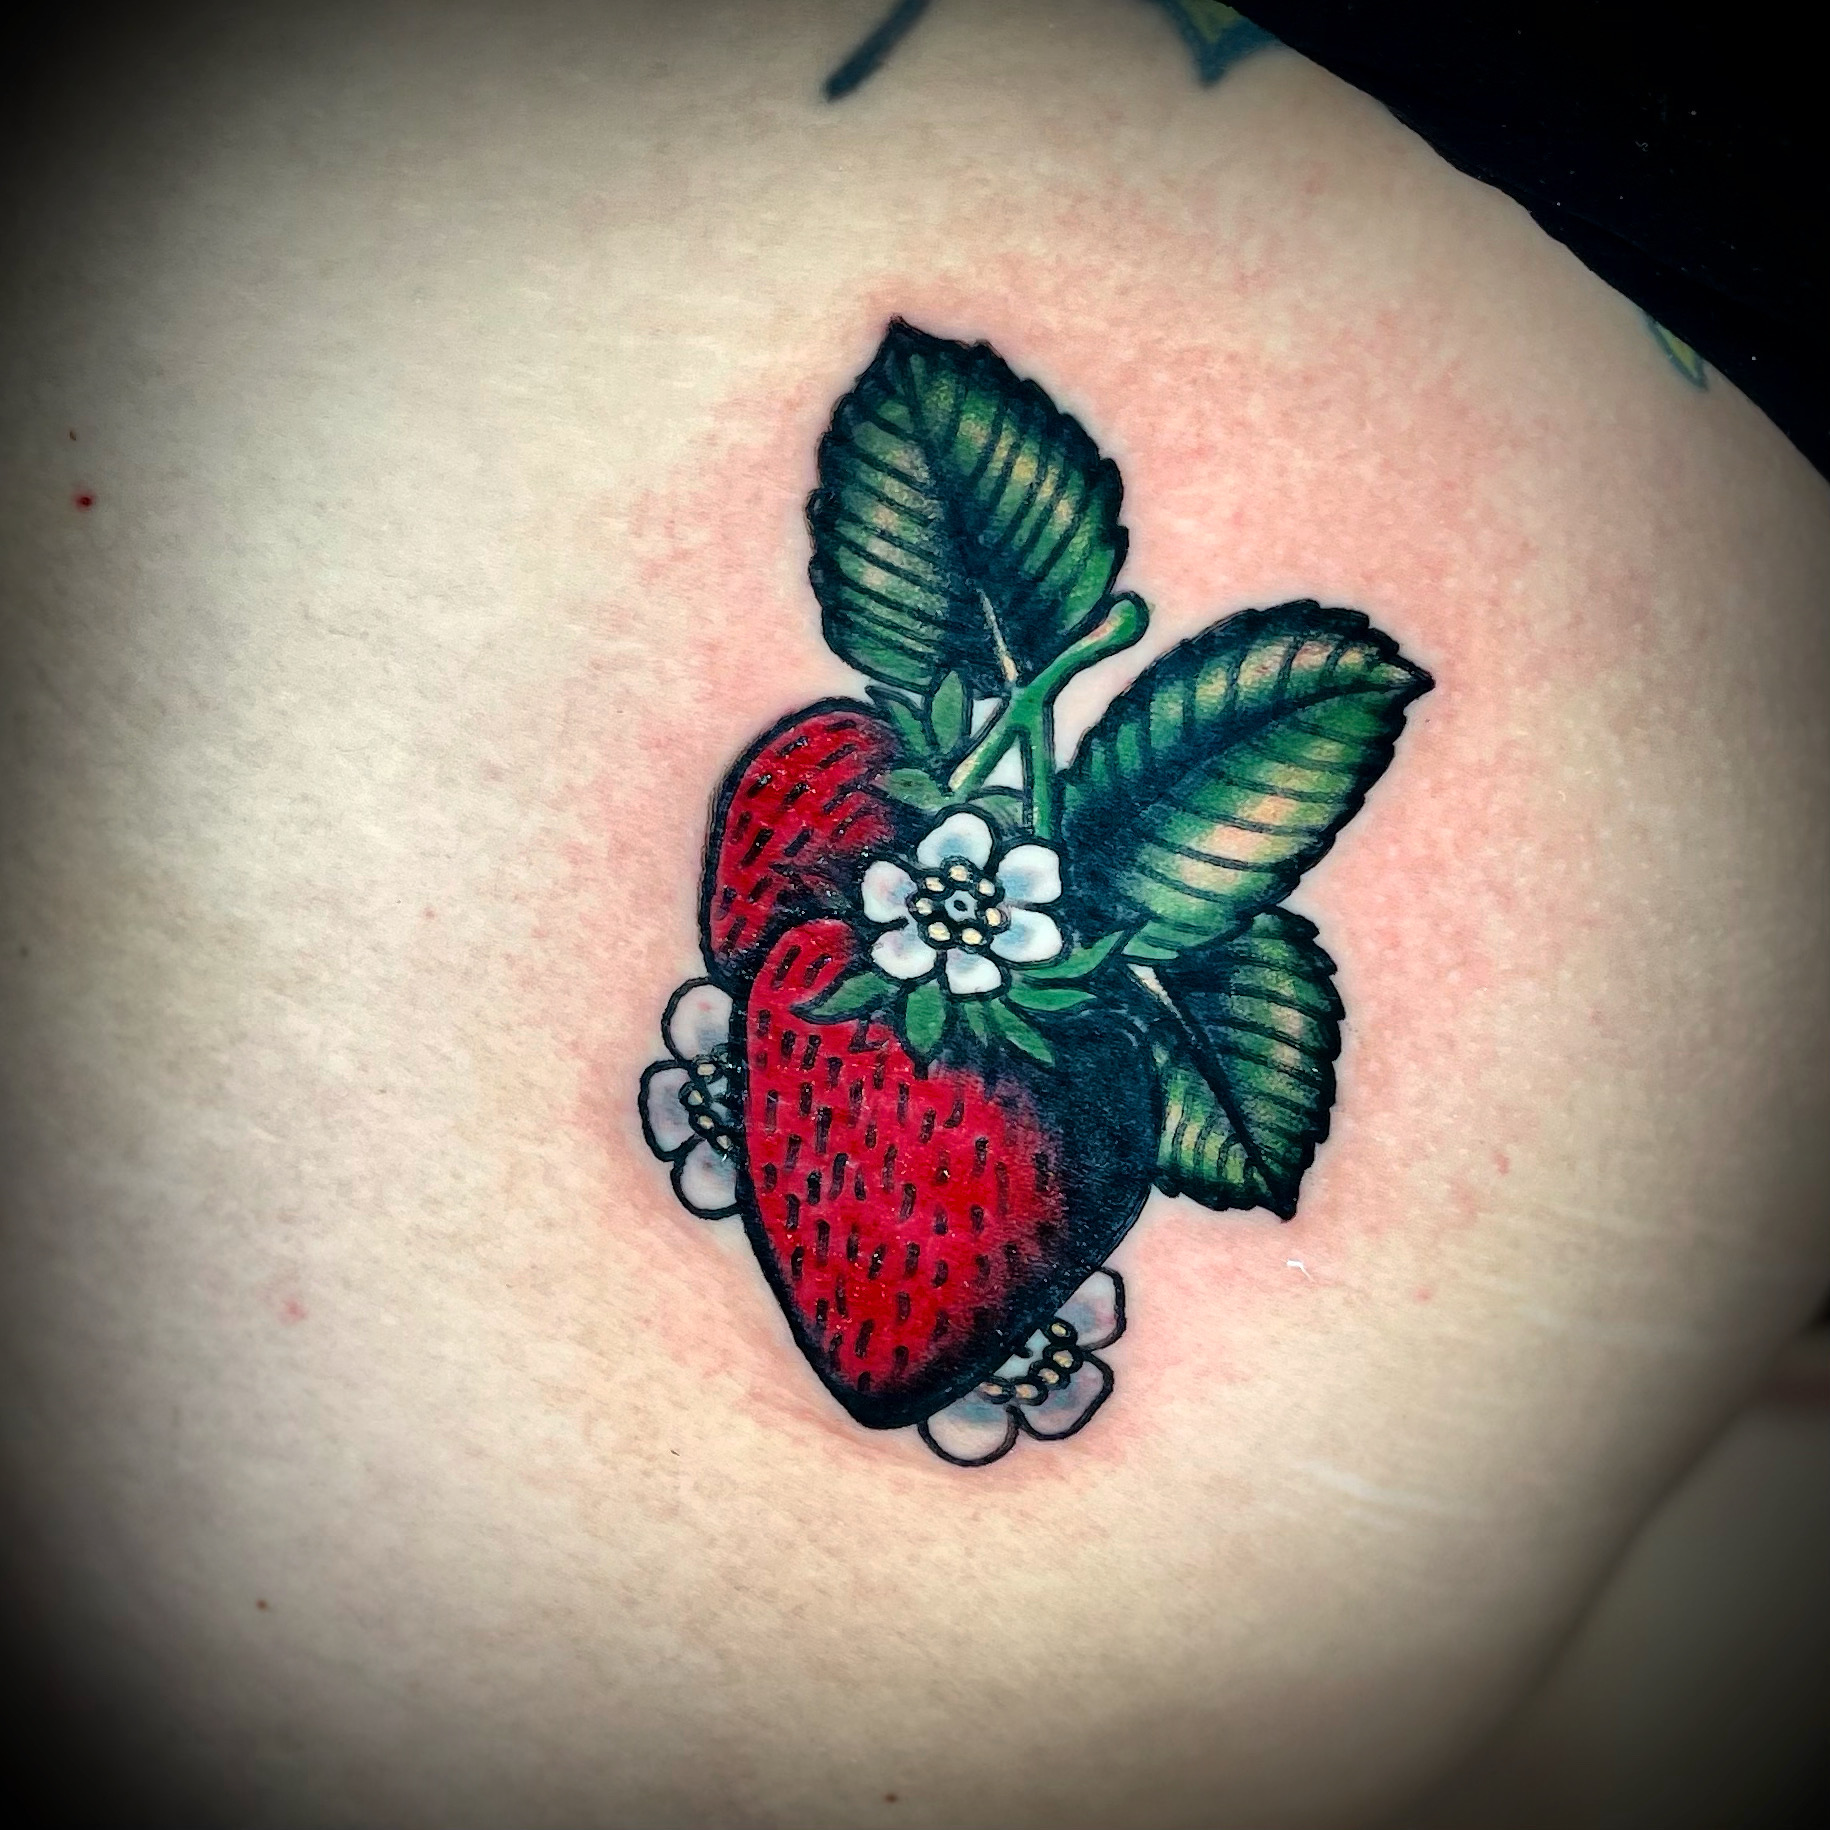 Tattoo of a strawberry